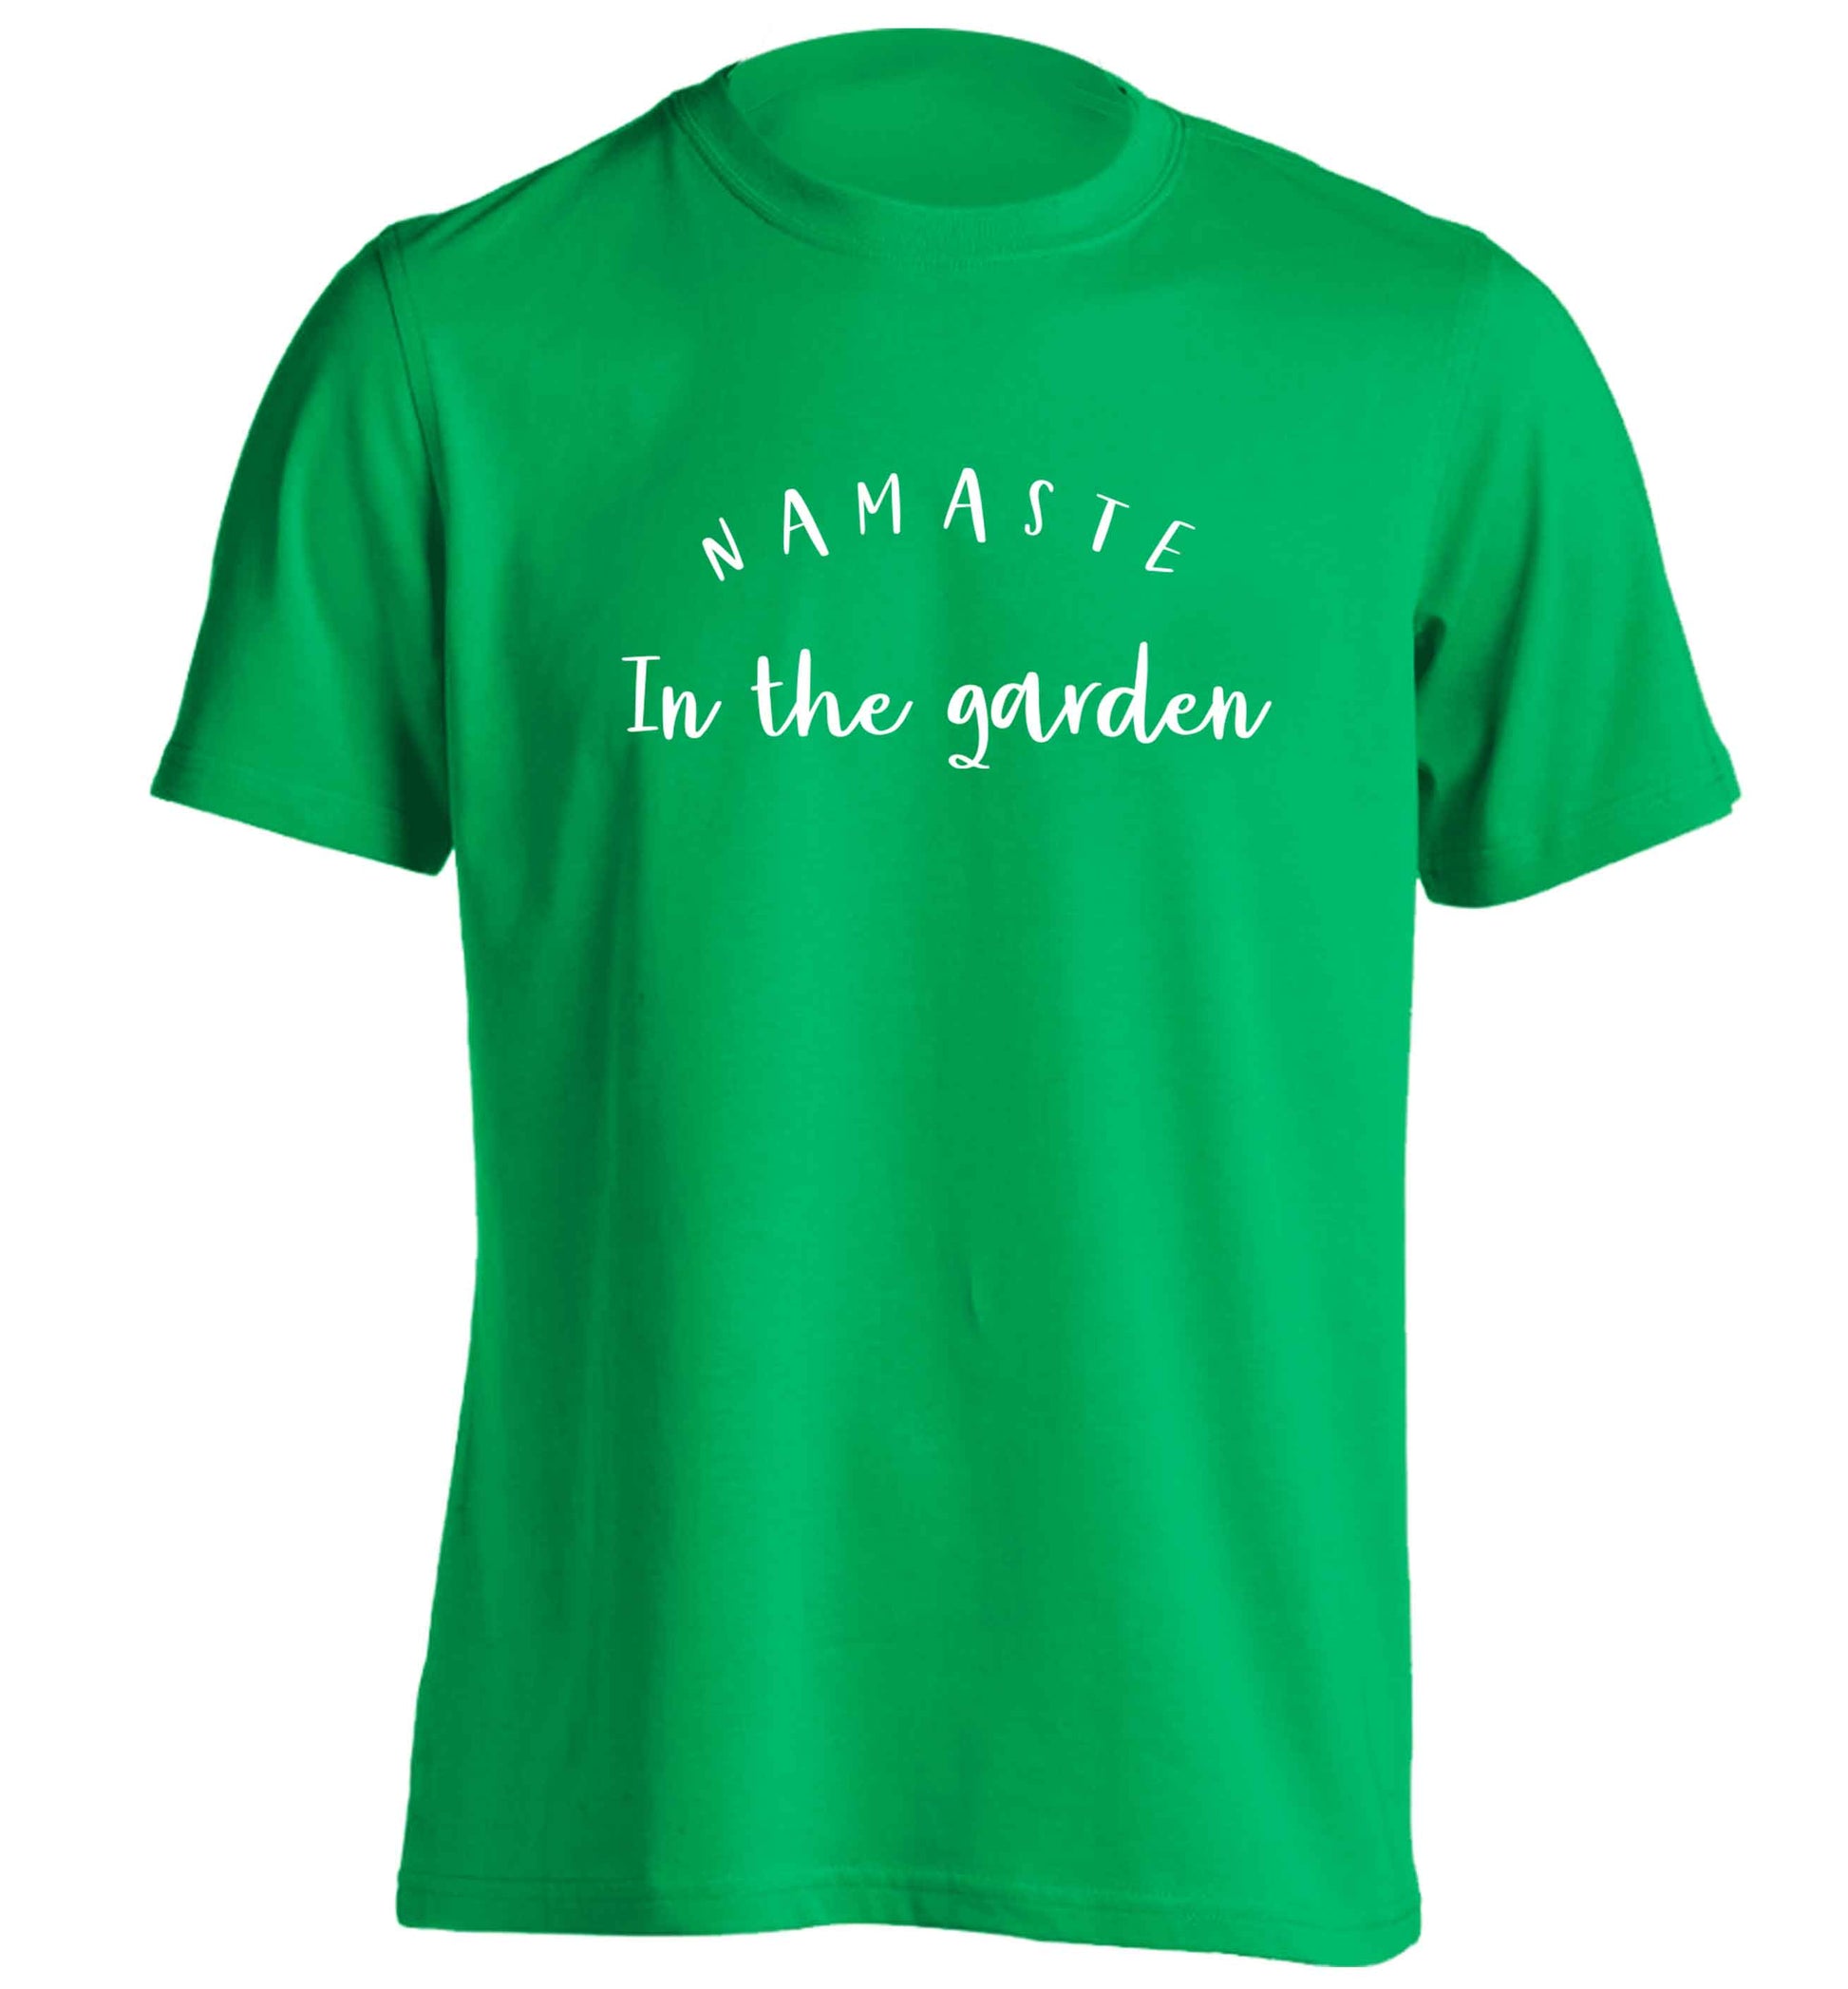 Namaste in the garden adults unisex green Tshirt 2XL